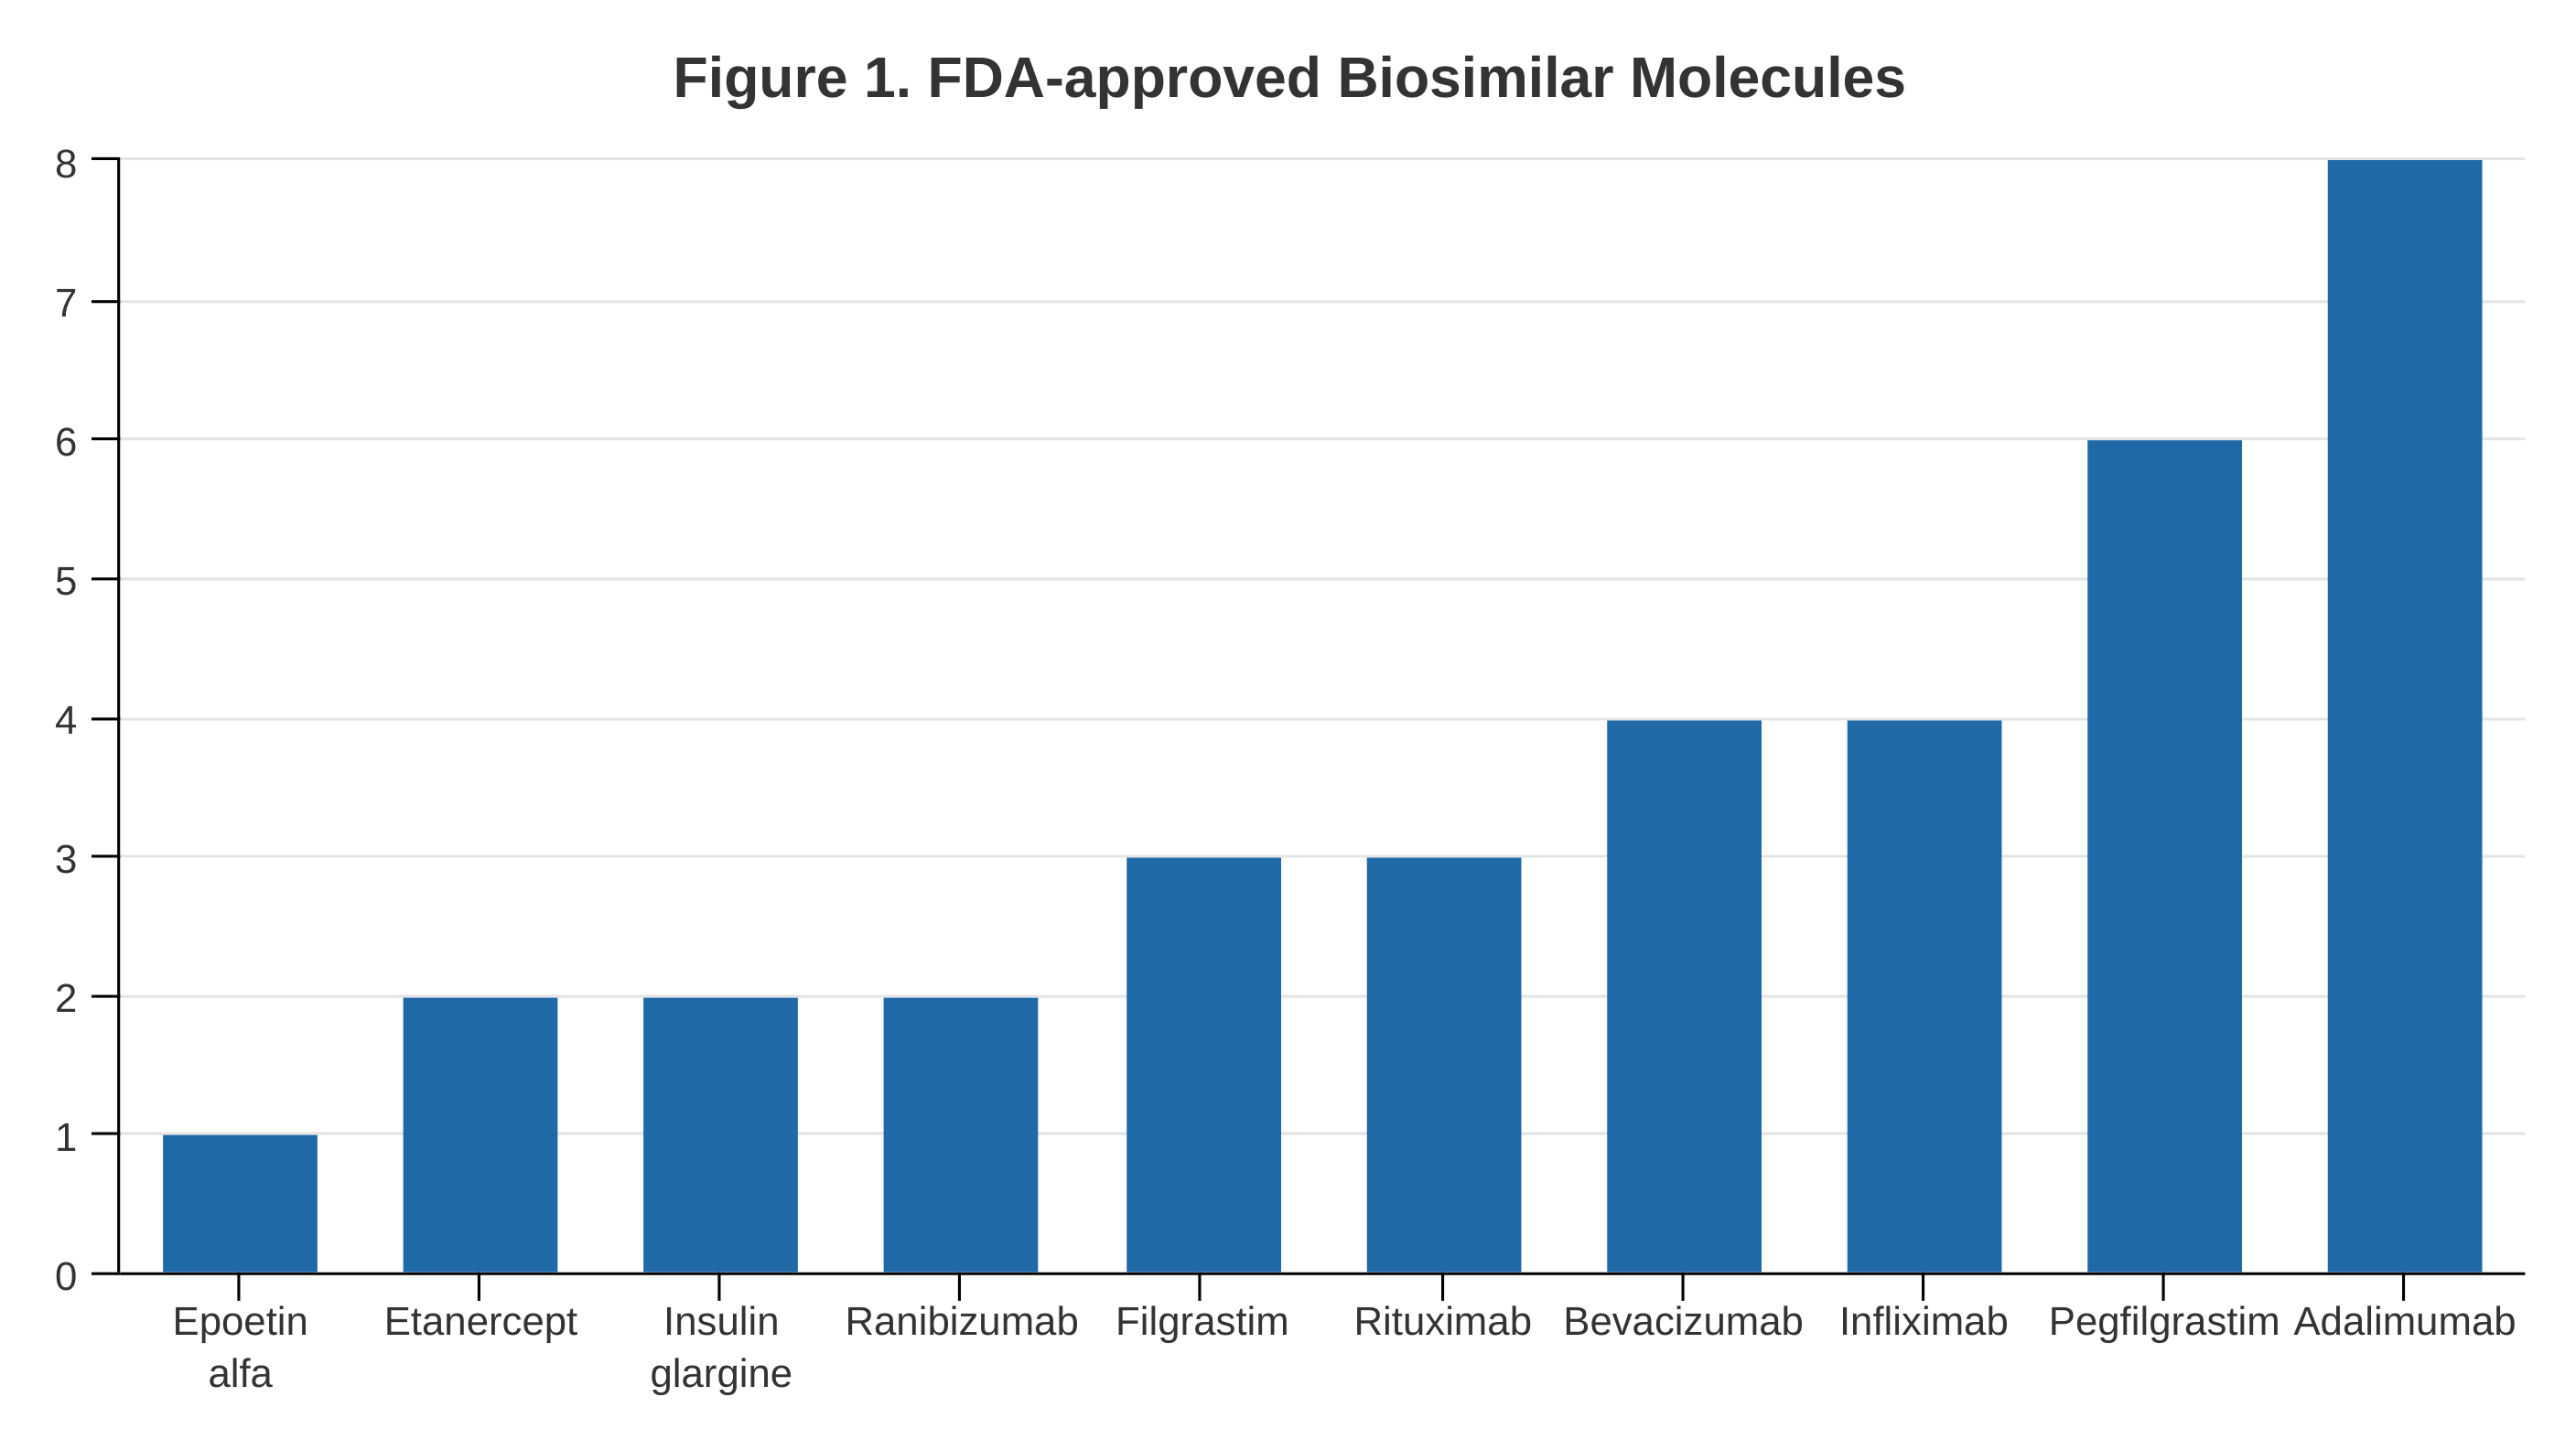 Figure 1. FDA-approved biosimilar molecules